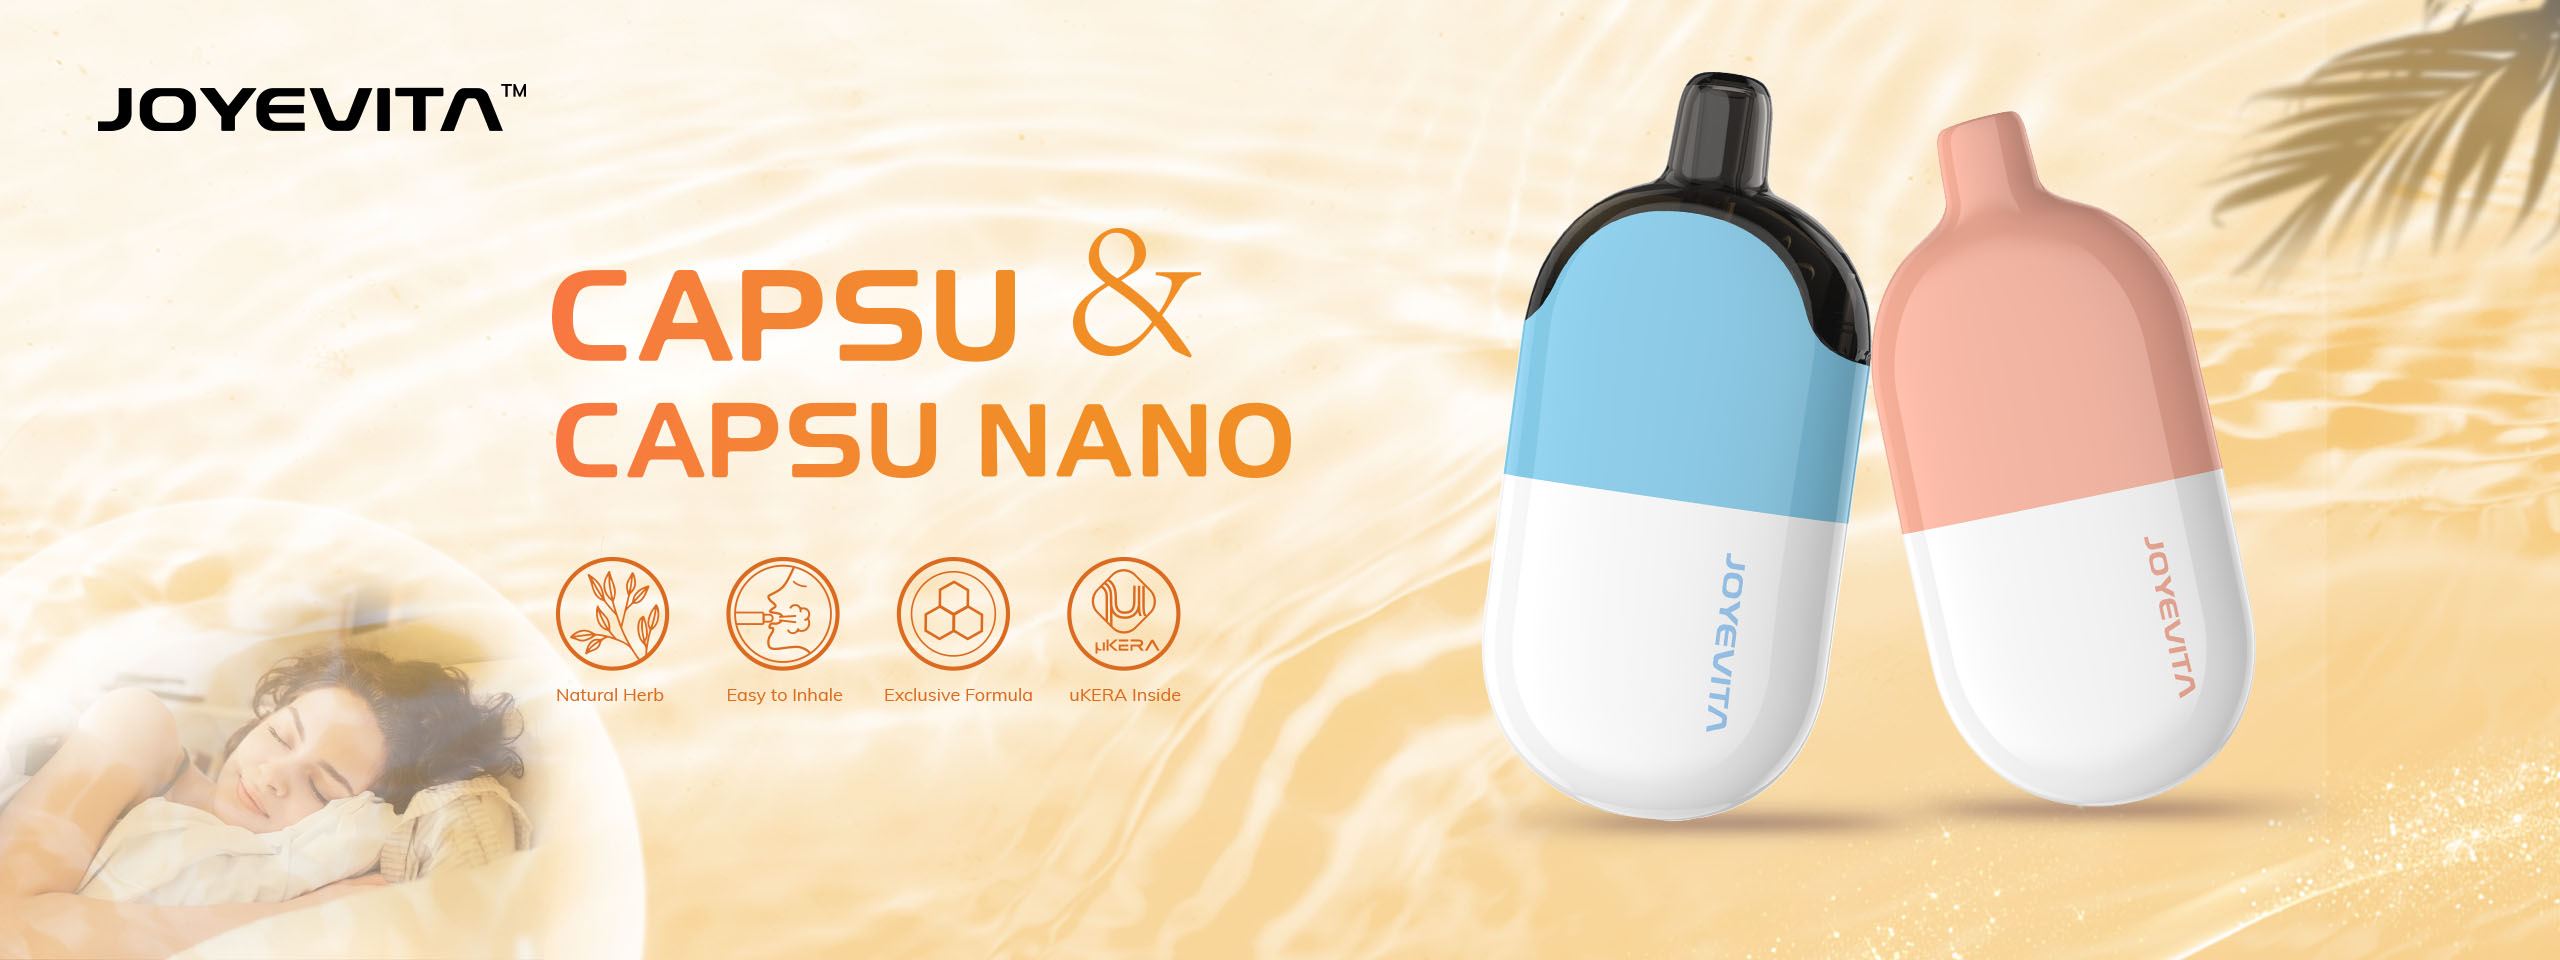 Joyevita Capsu Nano 300 Puffs Disposable Kit 1.3ml